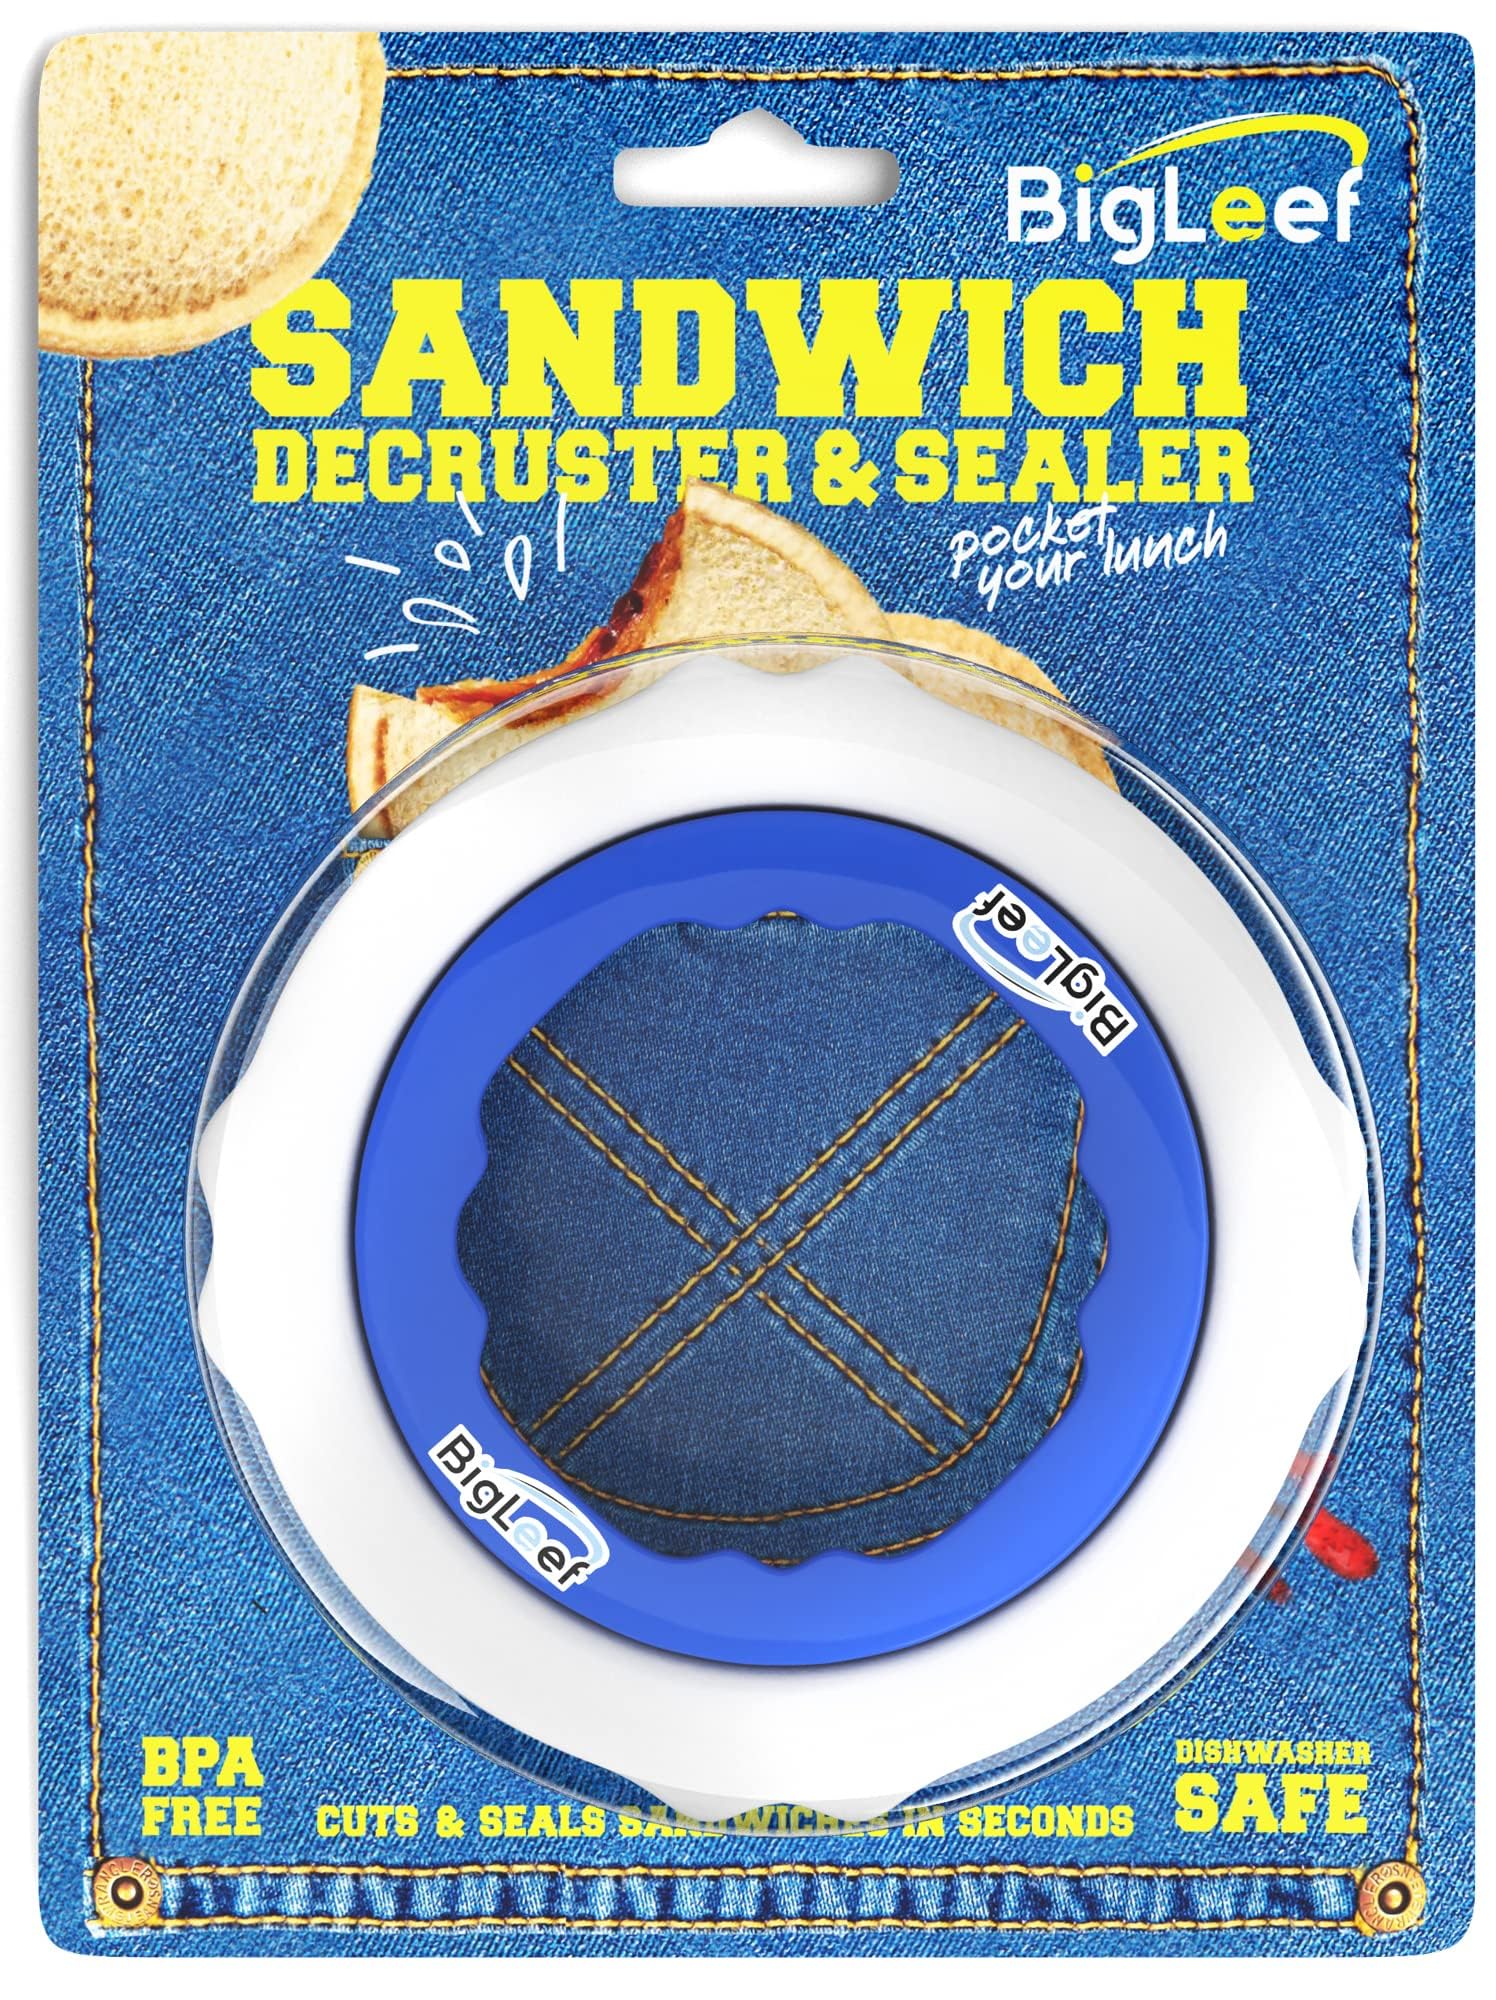 Uncrustable Sandwich Cutter and Sealer - PBJ Sandwich Cutter for Kids Lunch - Make & Freeze DIY Pocket Minis - Homemade Uncrustables Sandwich Maker - Crustless Bread Sandwich Sealer Decruster (Round)